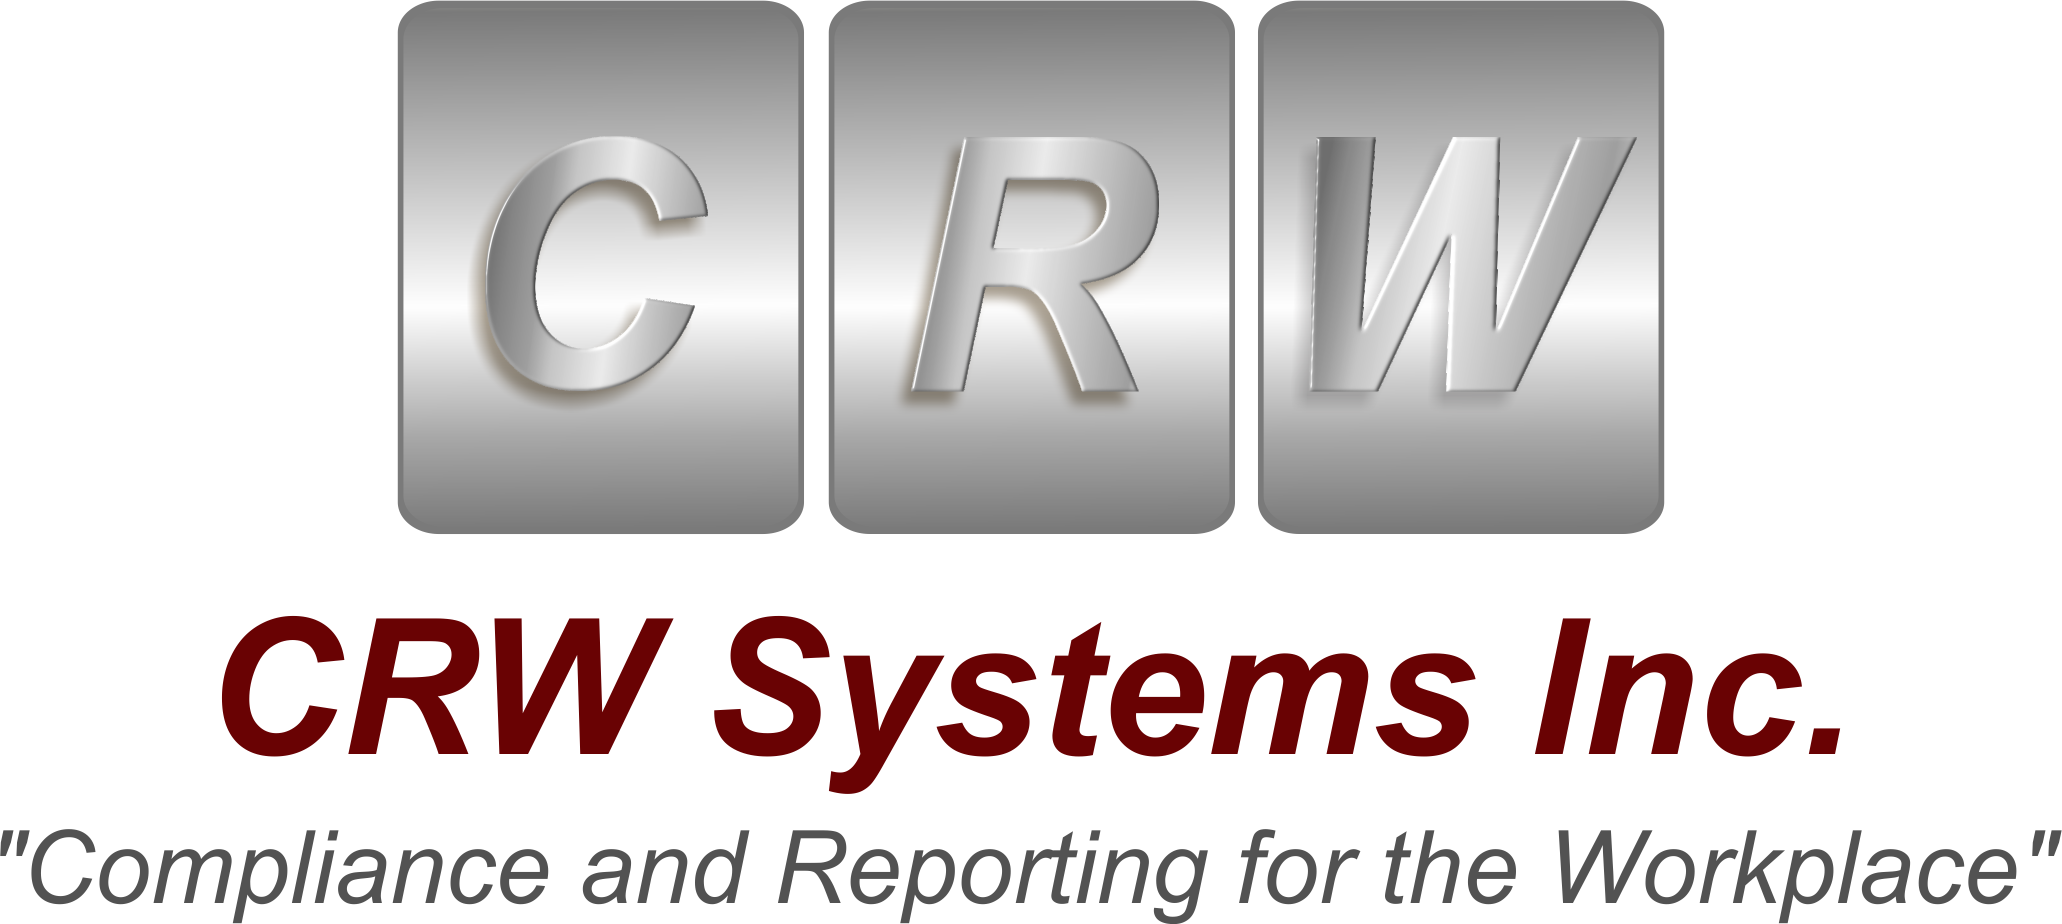 CRW Systems Inc.